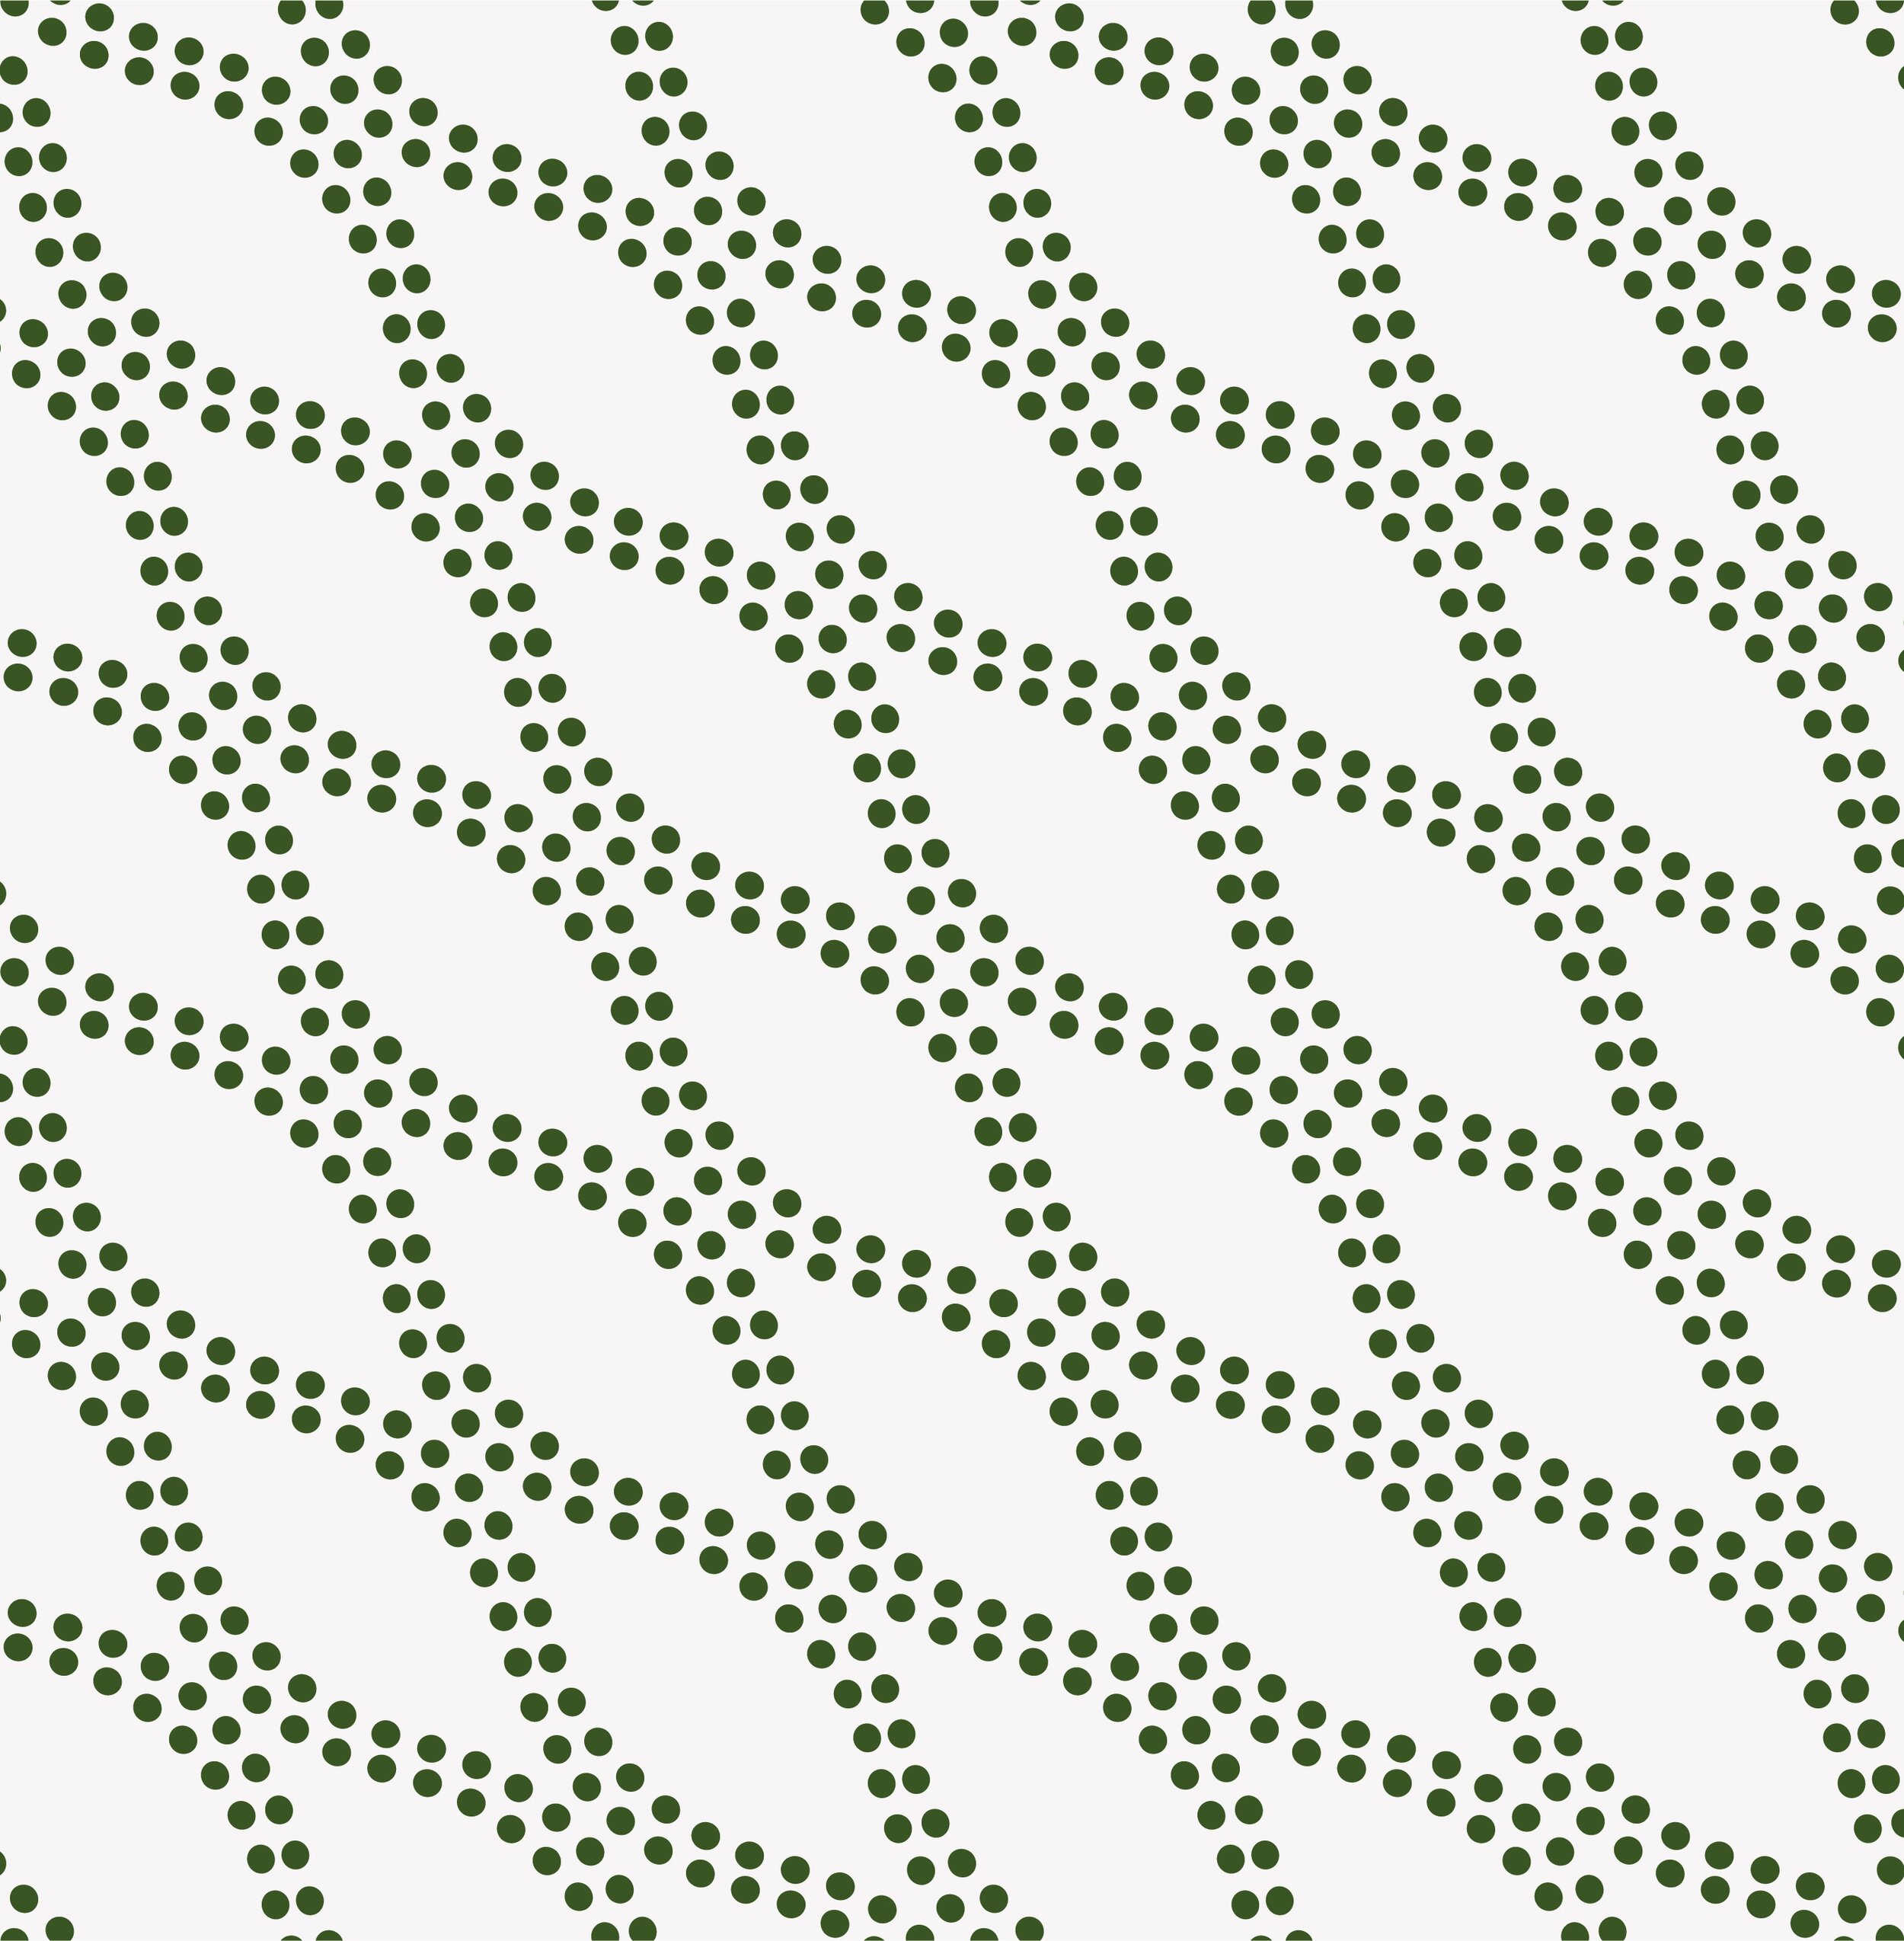 Duncan & Potts Law Firm Branding Wave Taupe Pattern.jpg